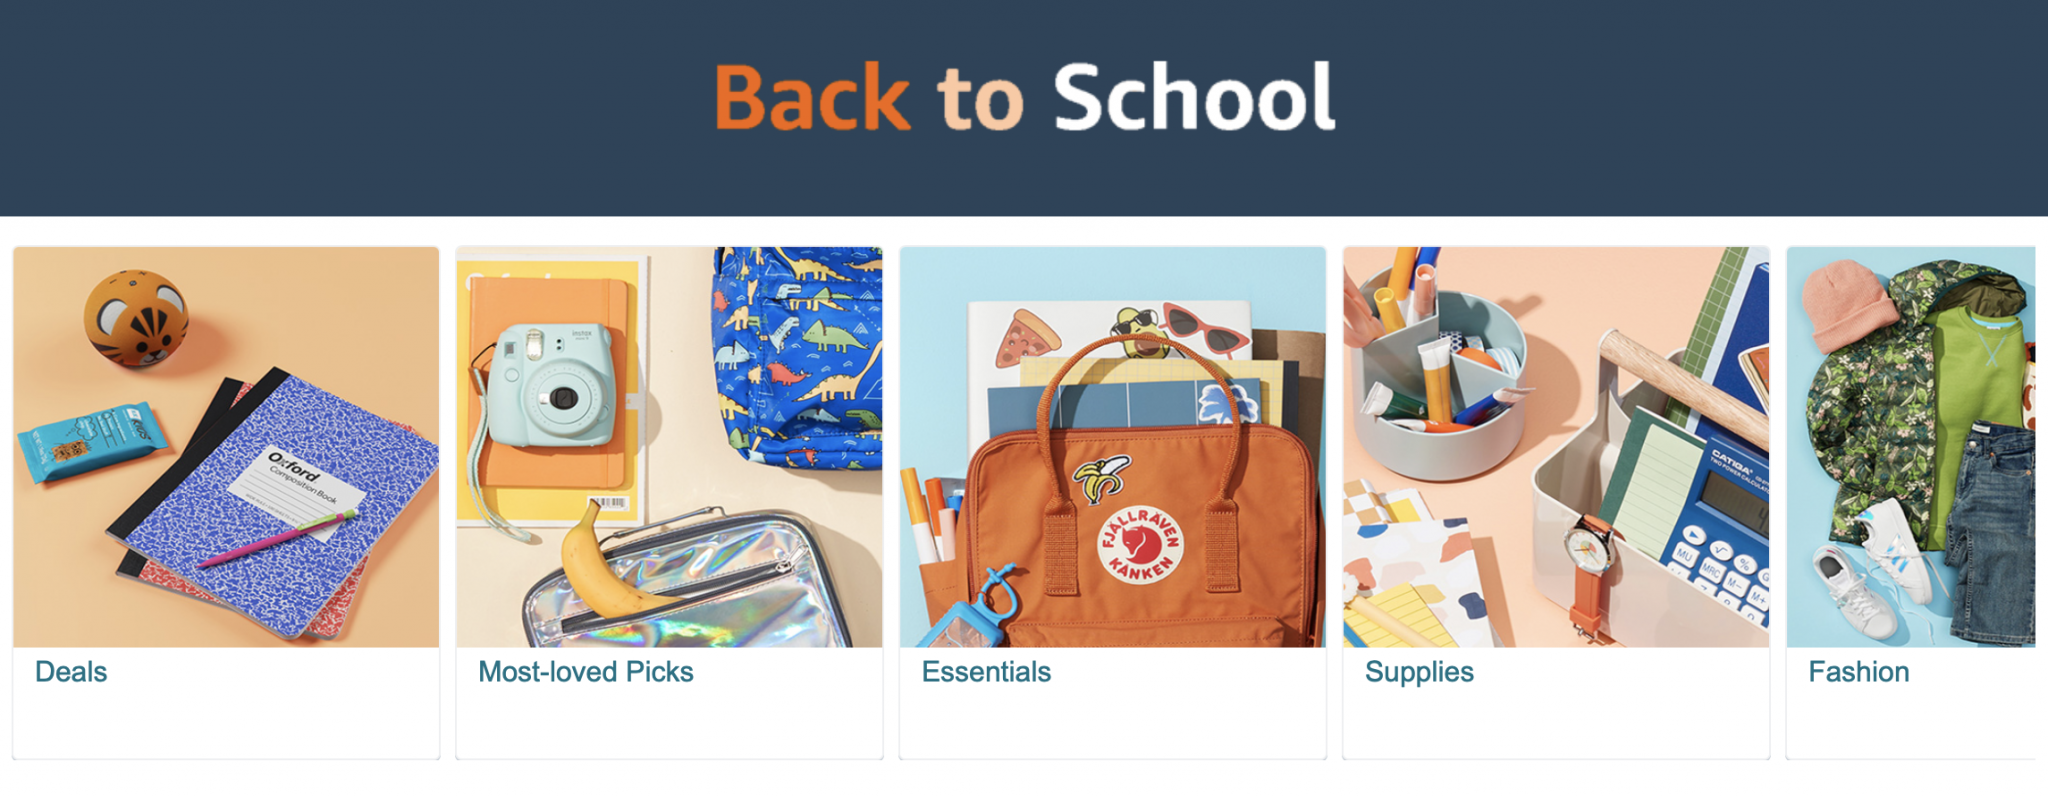 Amazon Back to School Prep Guide SellerEngine